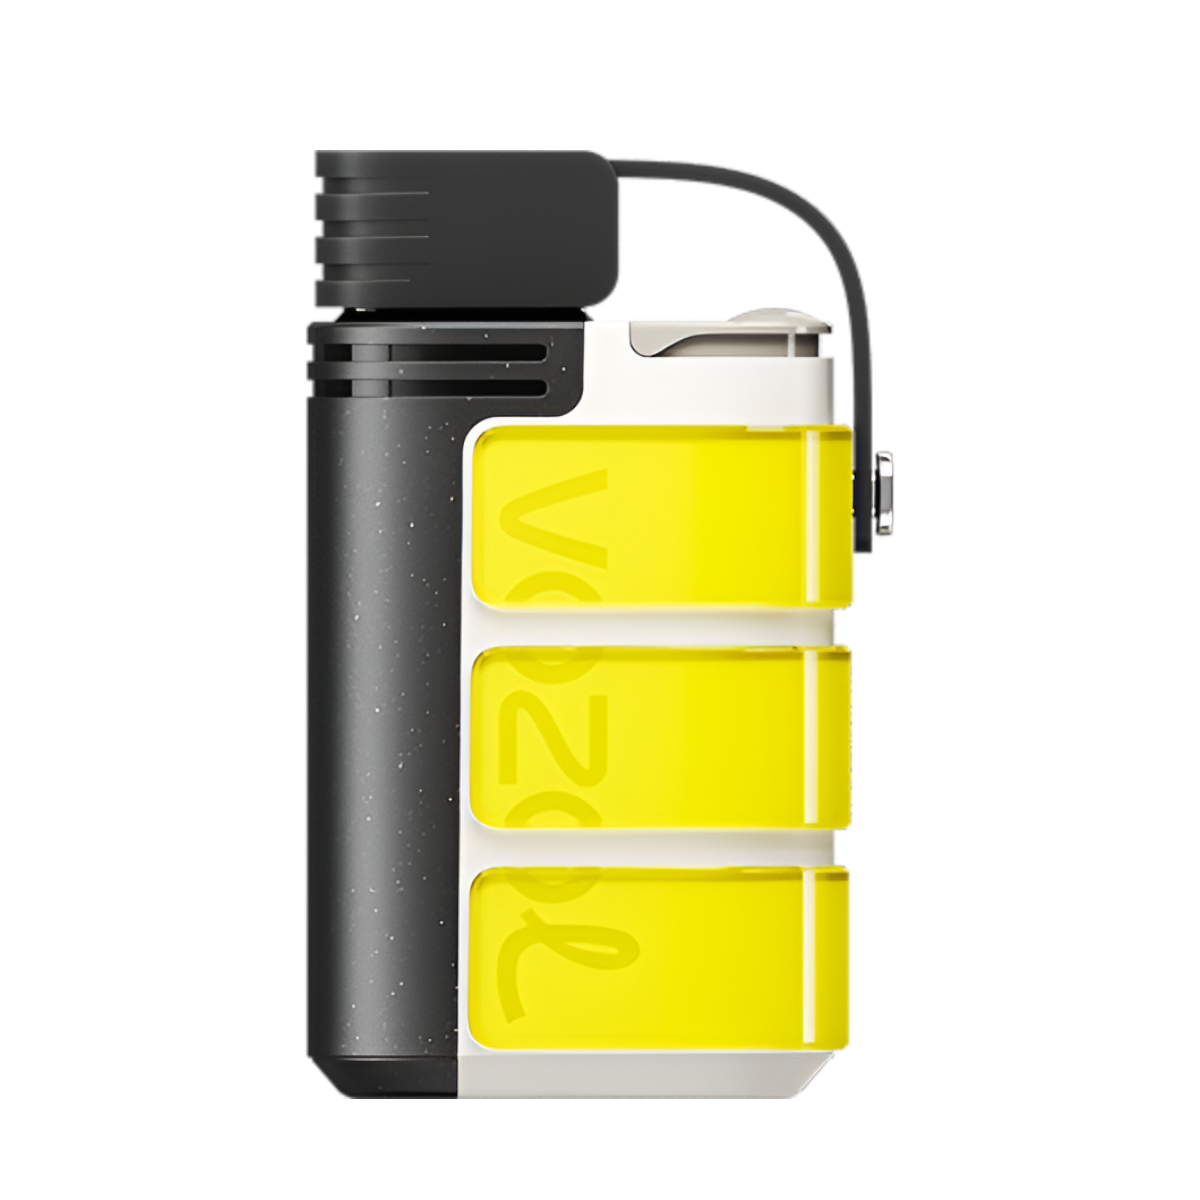 Vozol Gear 6000C Disposable Vape Lemon Yellow  